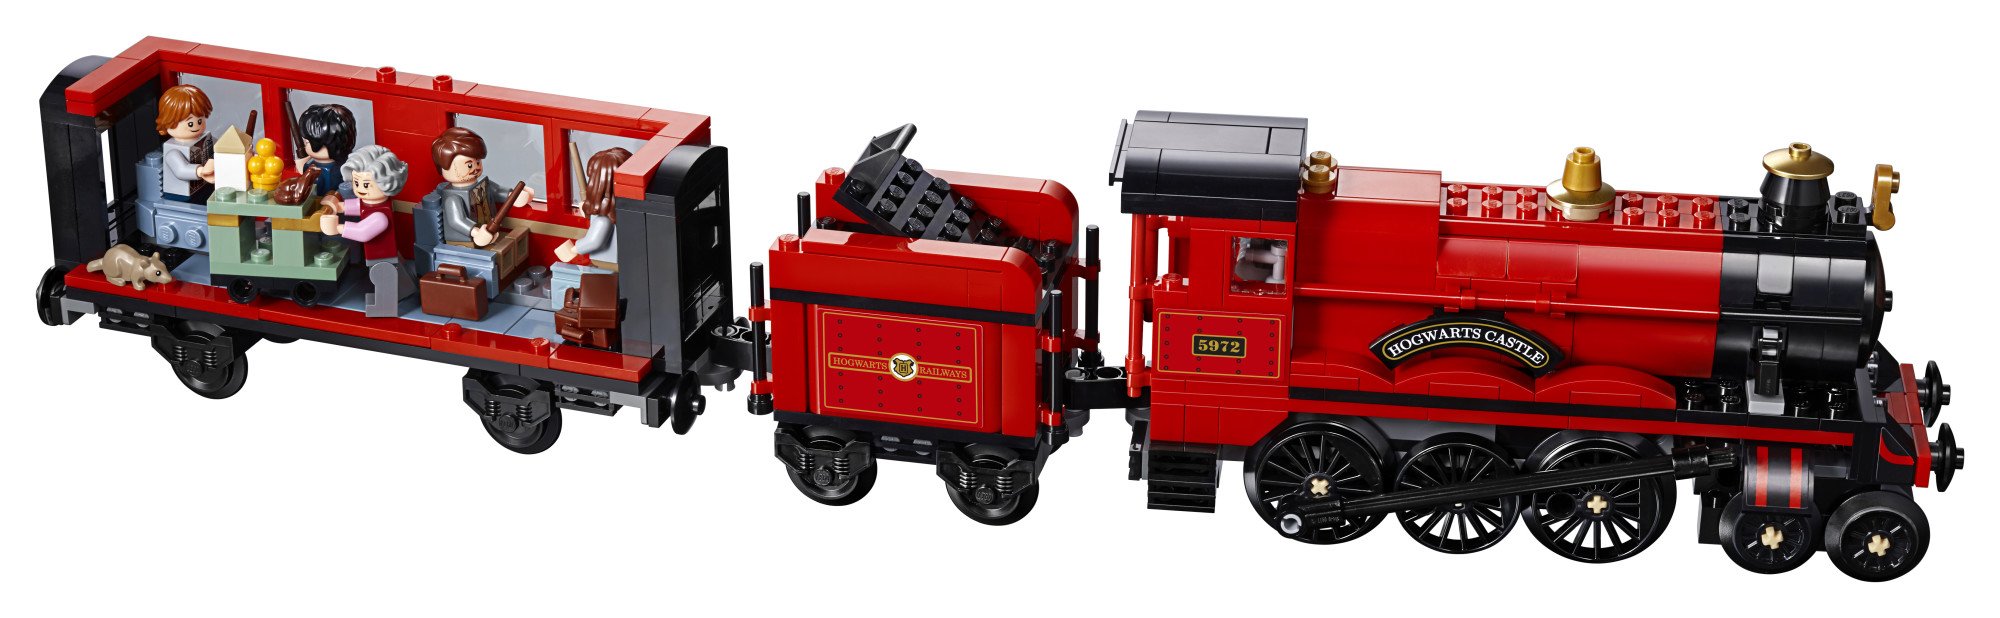 LEGO Harry Potter Hogwarts Express 75955 Building Kit (801 Piece), Multi